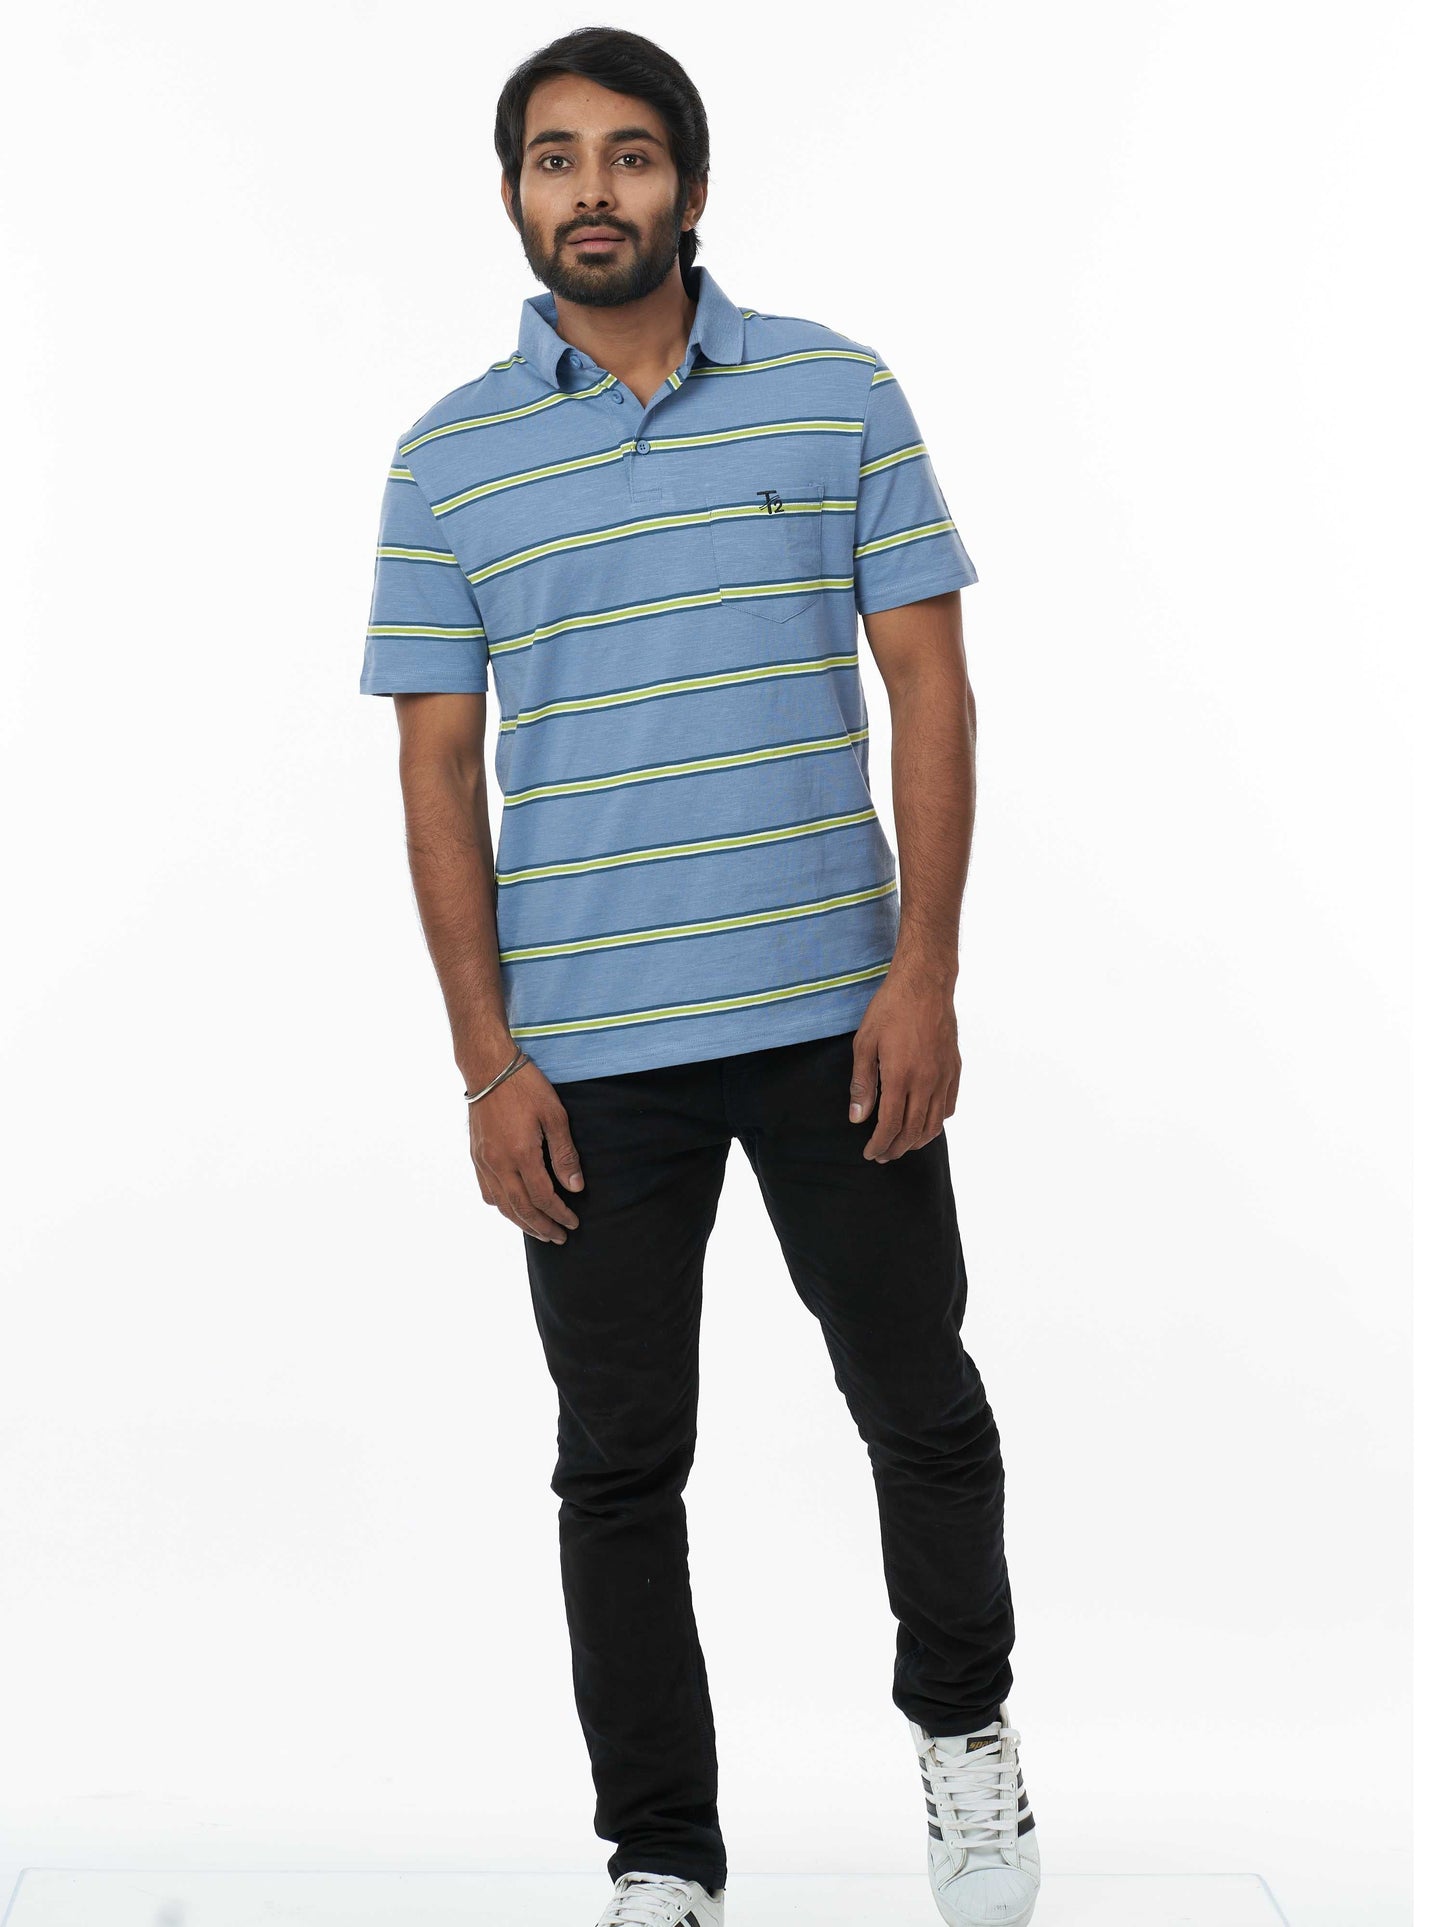 Bluefields Classic & Comfortable 100% Cotton Men's Collar T-Shirt